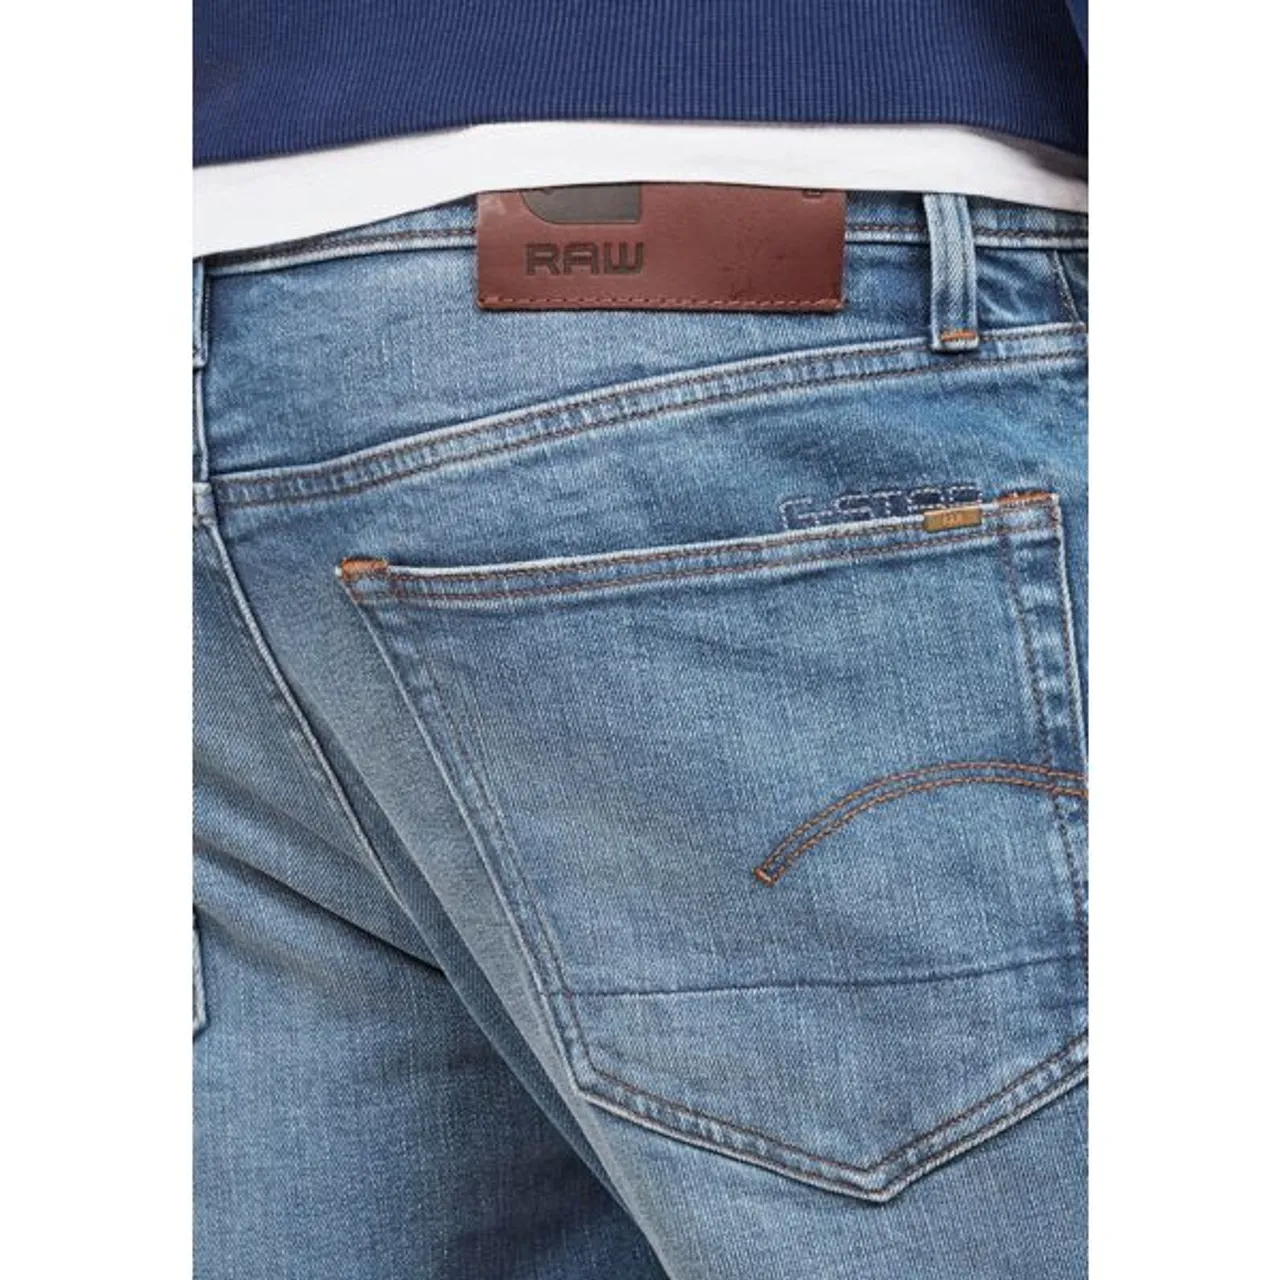 Regular-fit-Jeans G-STAR RAW "3301 Straight Tapered" Gr. 32, Länge 34, blau (blue, aged) Herren Jeans Regular Fit